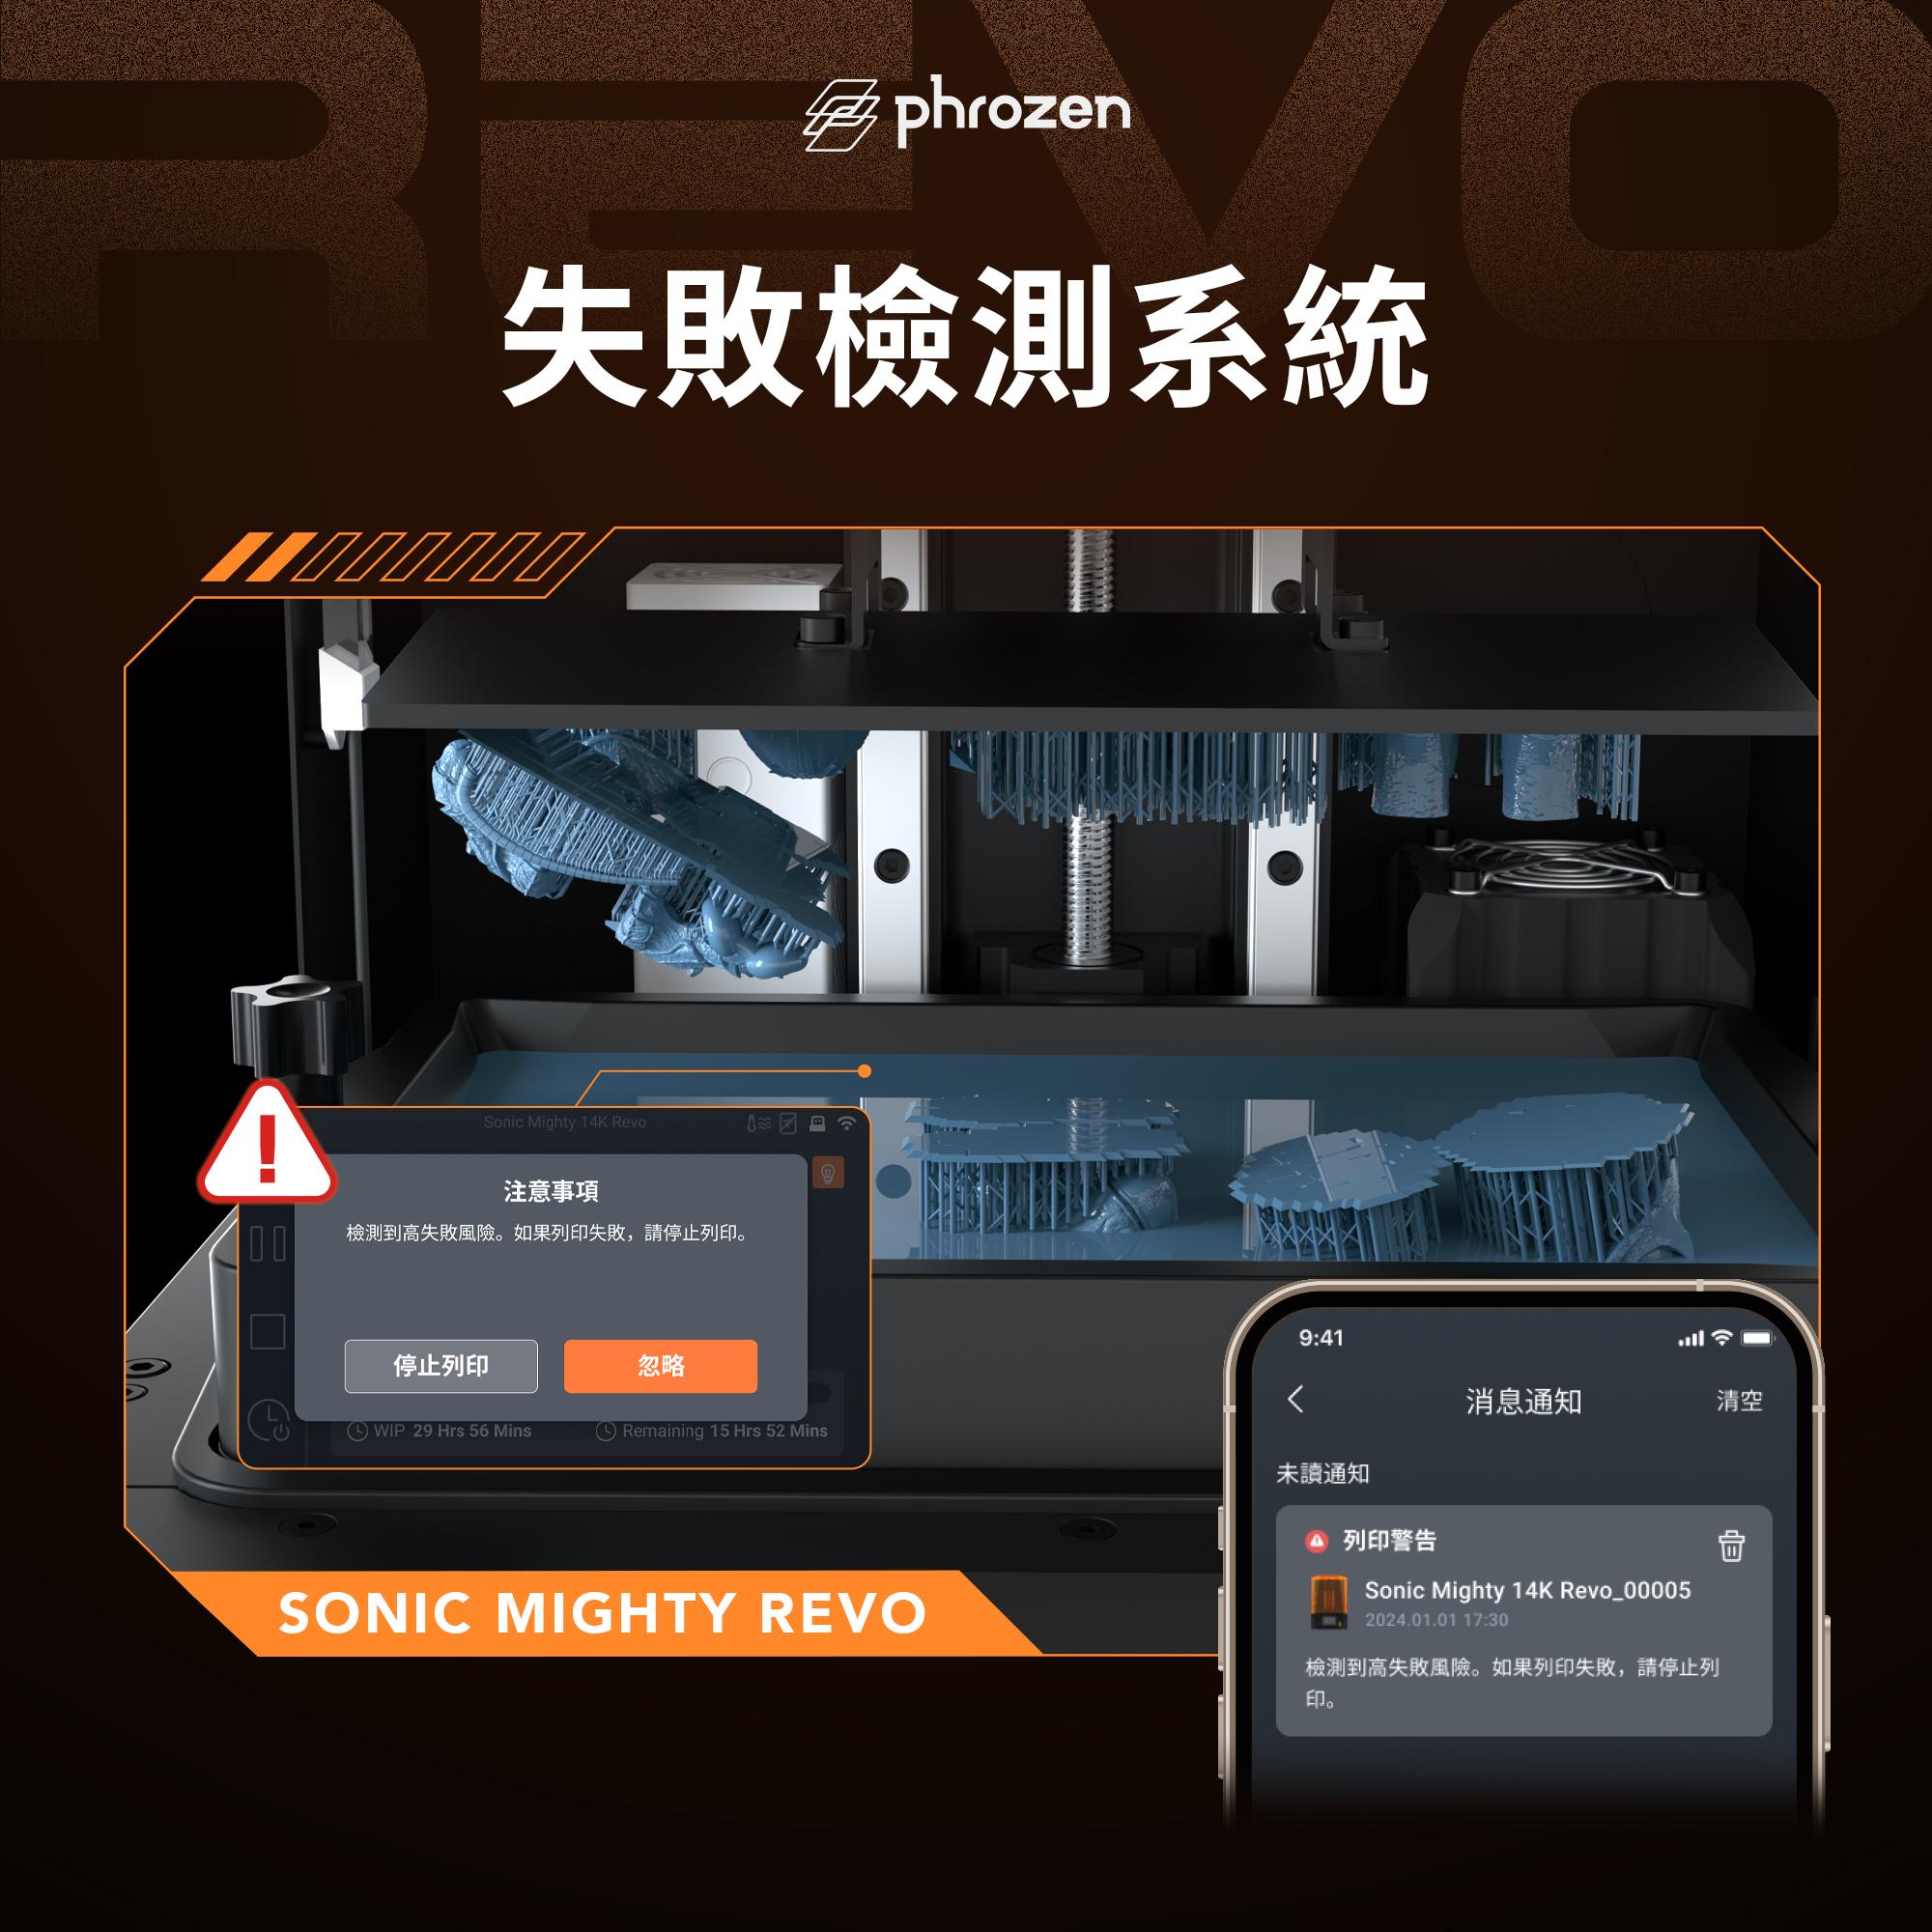 【REVO】Sonic Mighty Revo 快速列印組合，機器+1瓶TR300樹脂